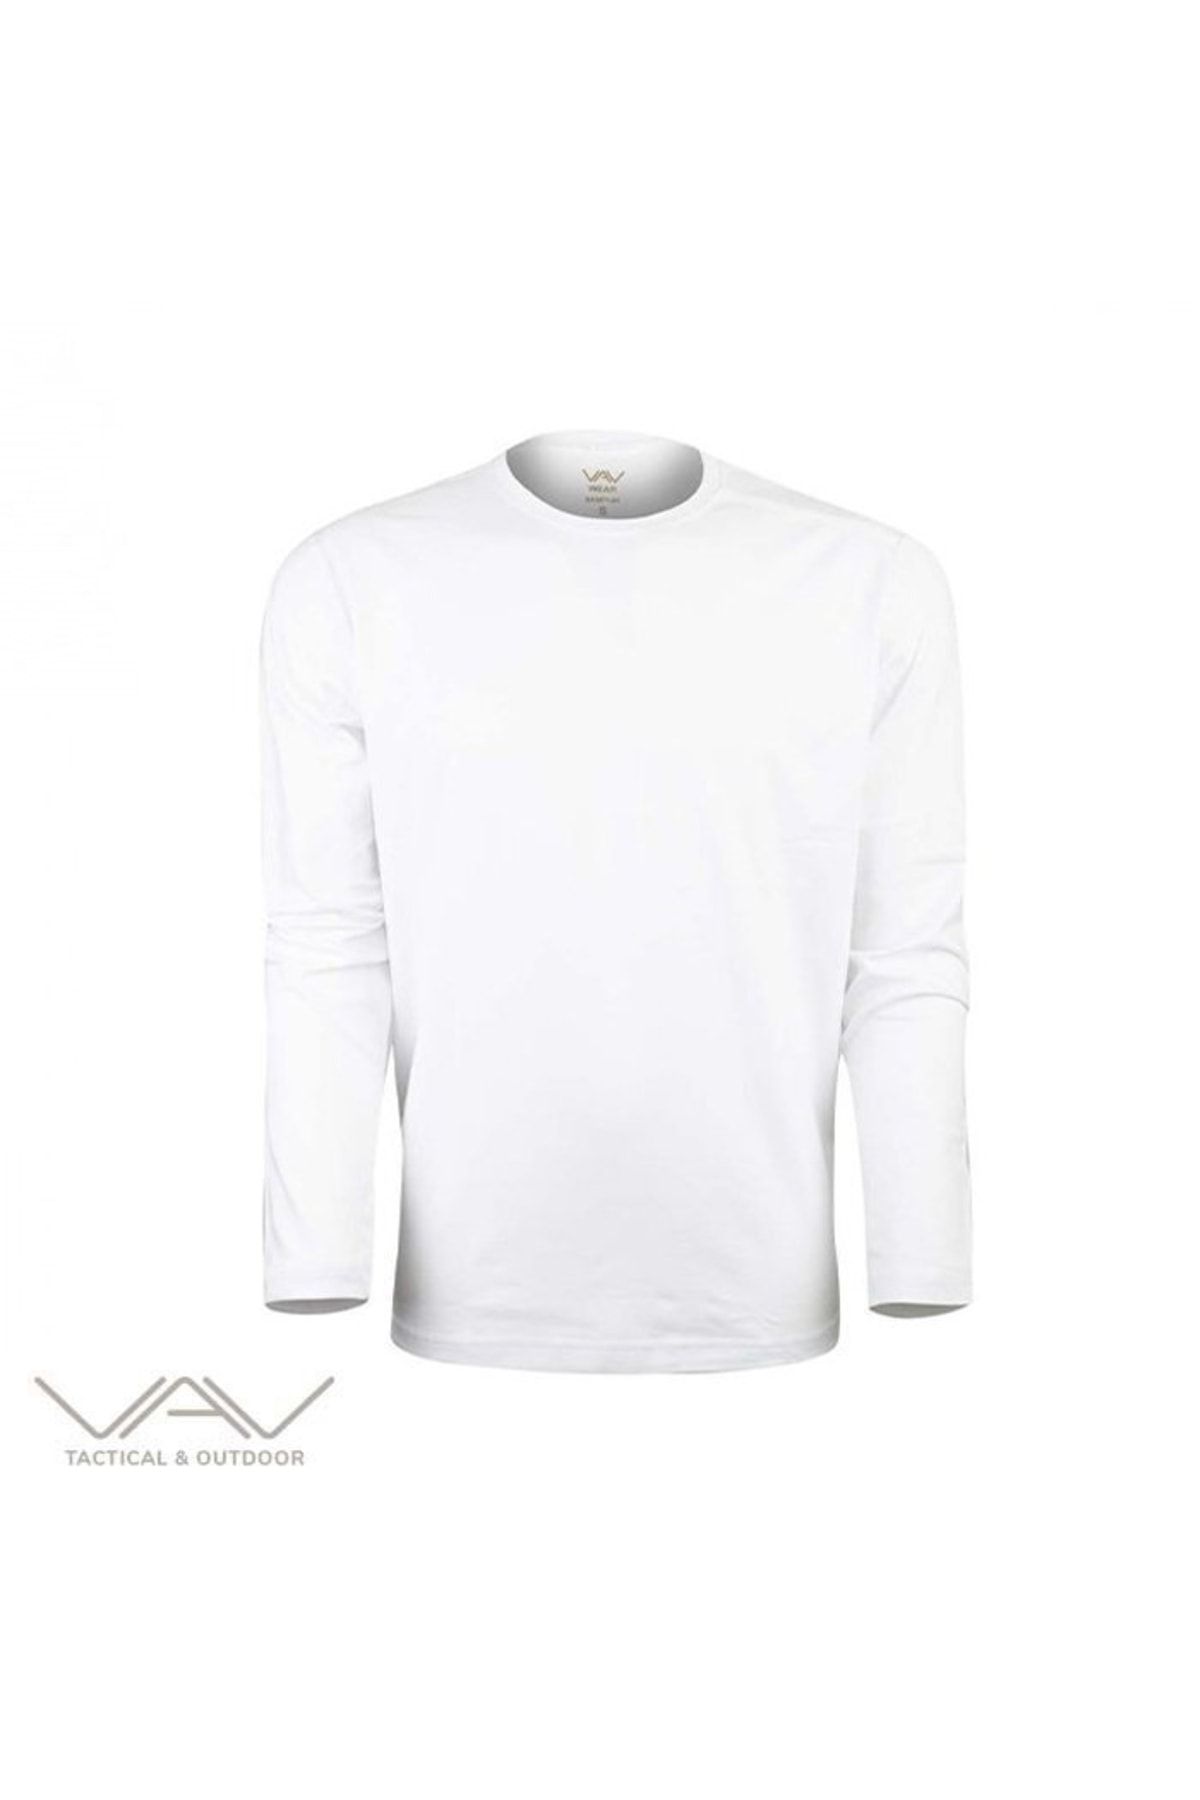 VAV WEAR Vav Baseti-04 Uzun Kol Sweatshirt Beyaz L